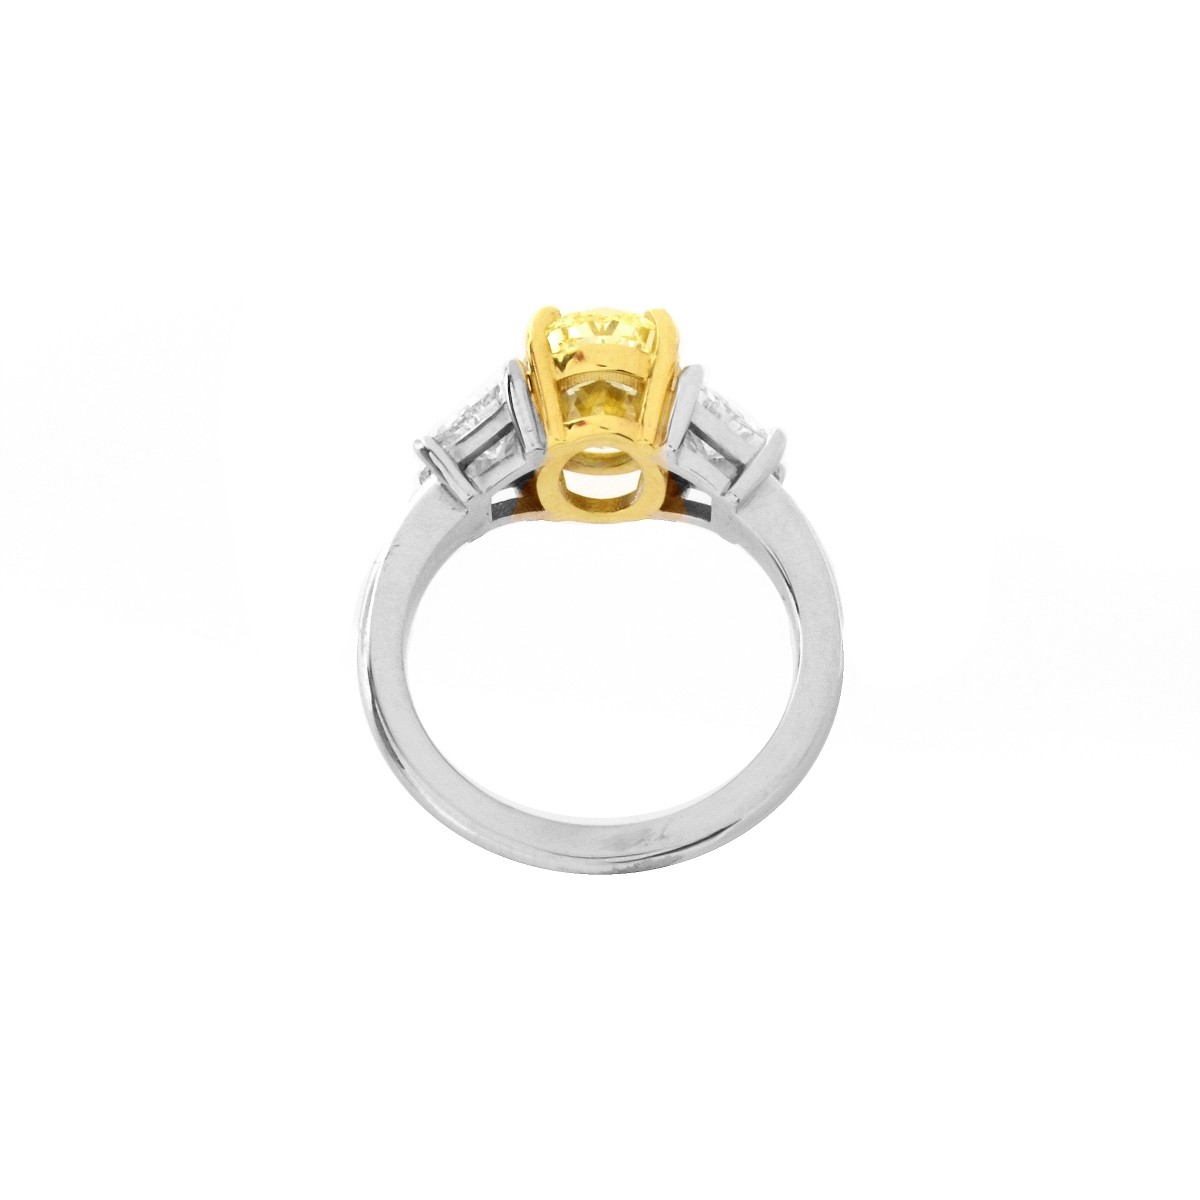 Fancy Yellow Diamond and 14K Ring